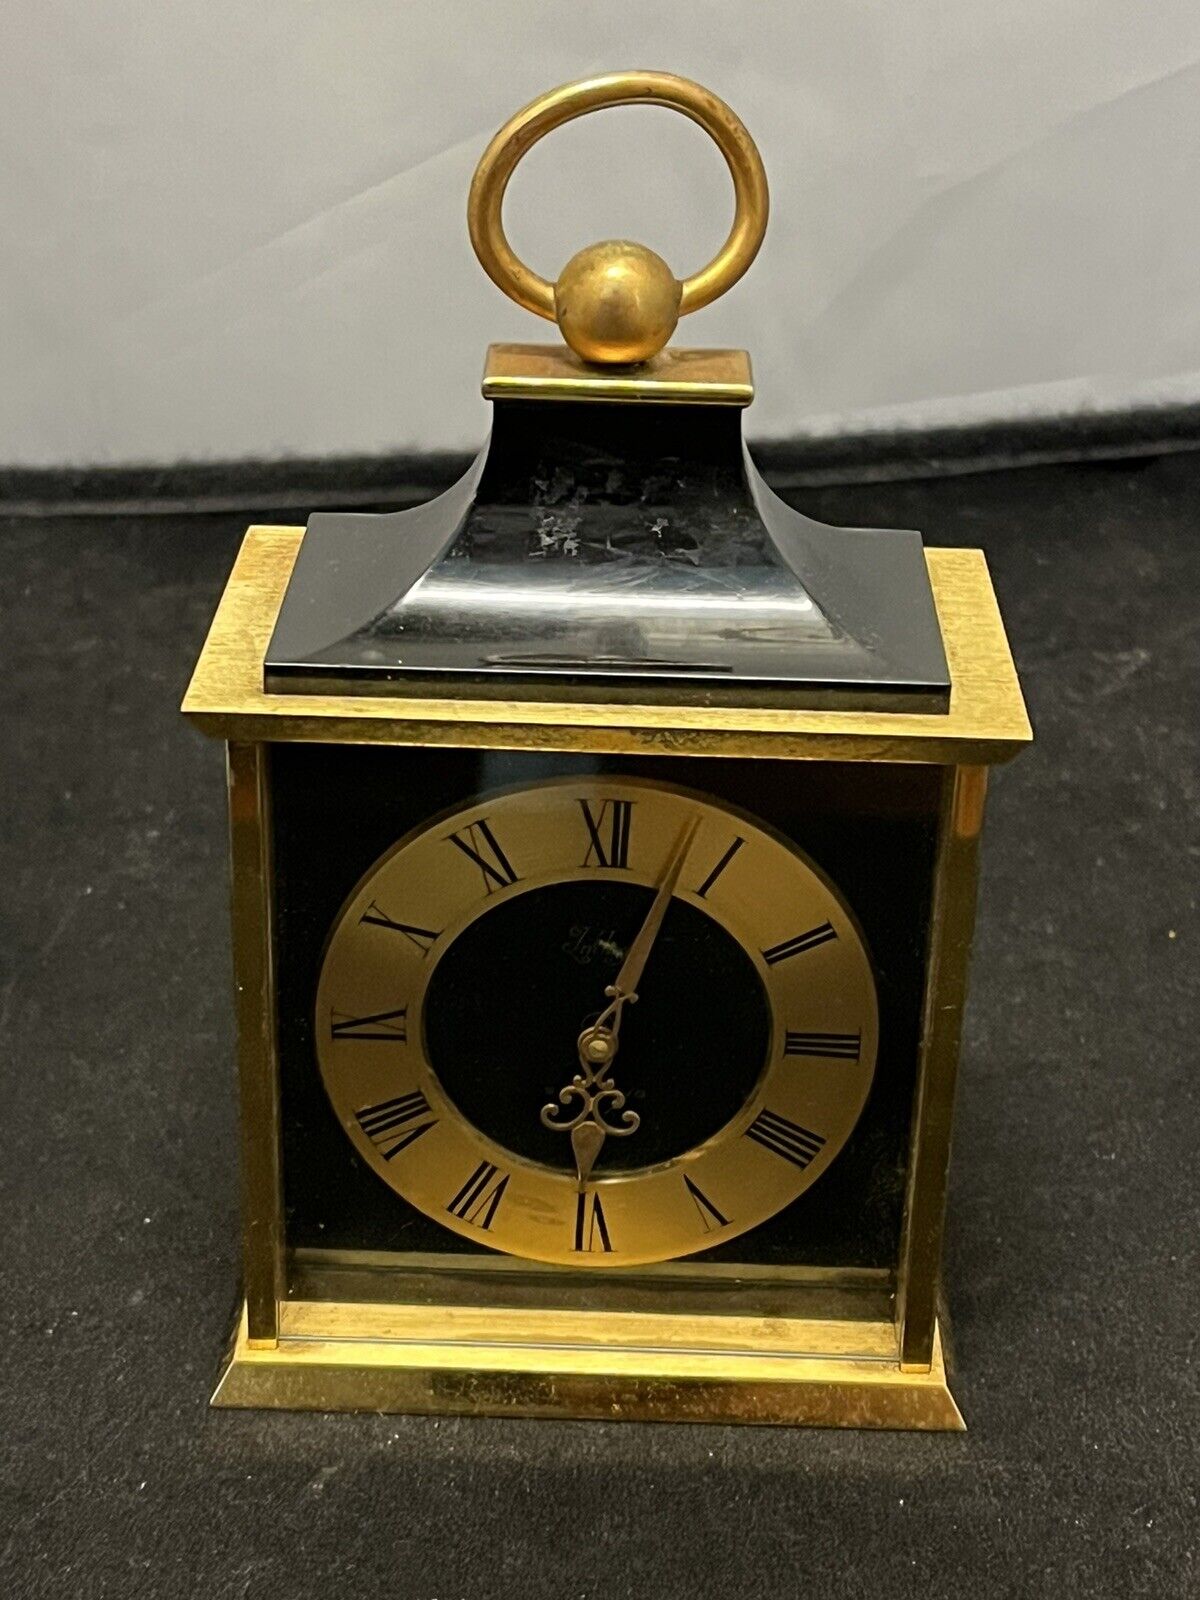 Imhoff Swiss Brass & Enamel Striking Carriage Clock 17 Jewels Weighs 3.7Lbs.